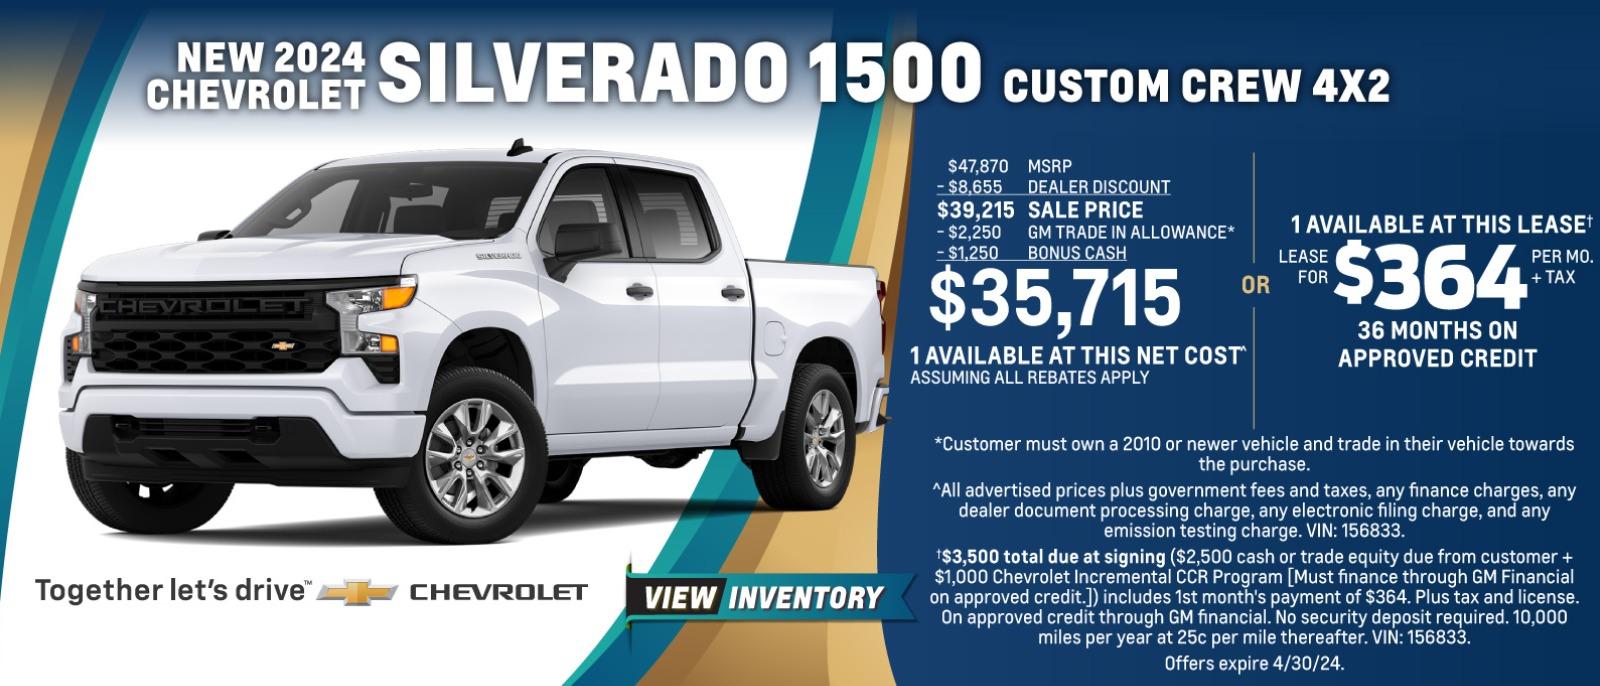 New 2023 Chevy Silverado 1500